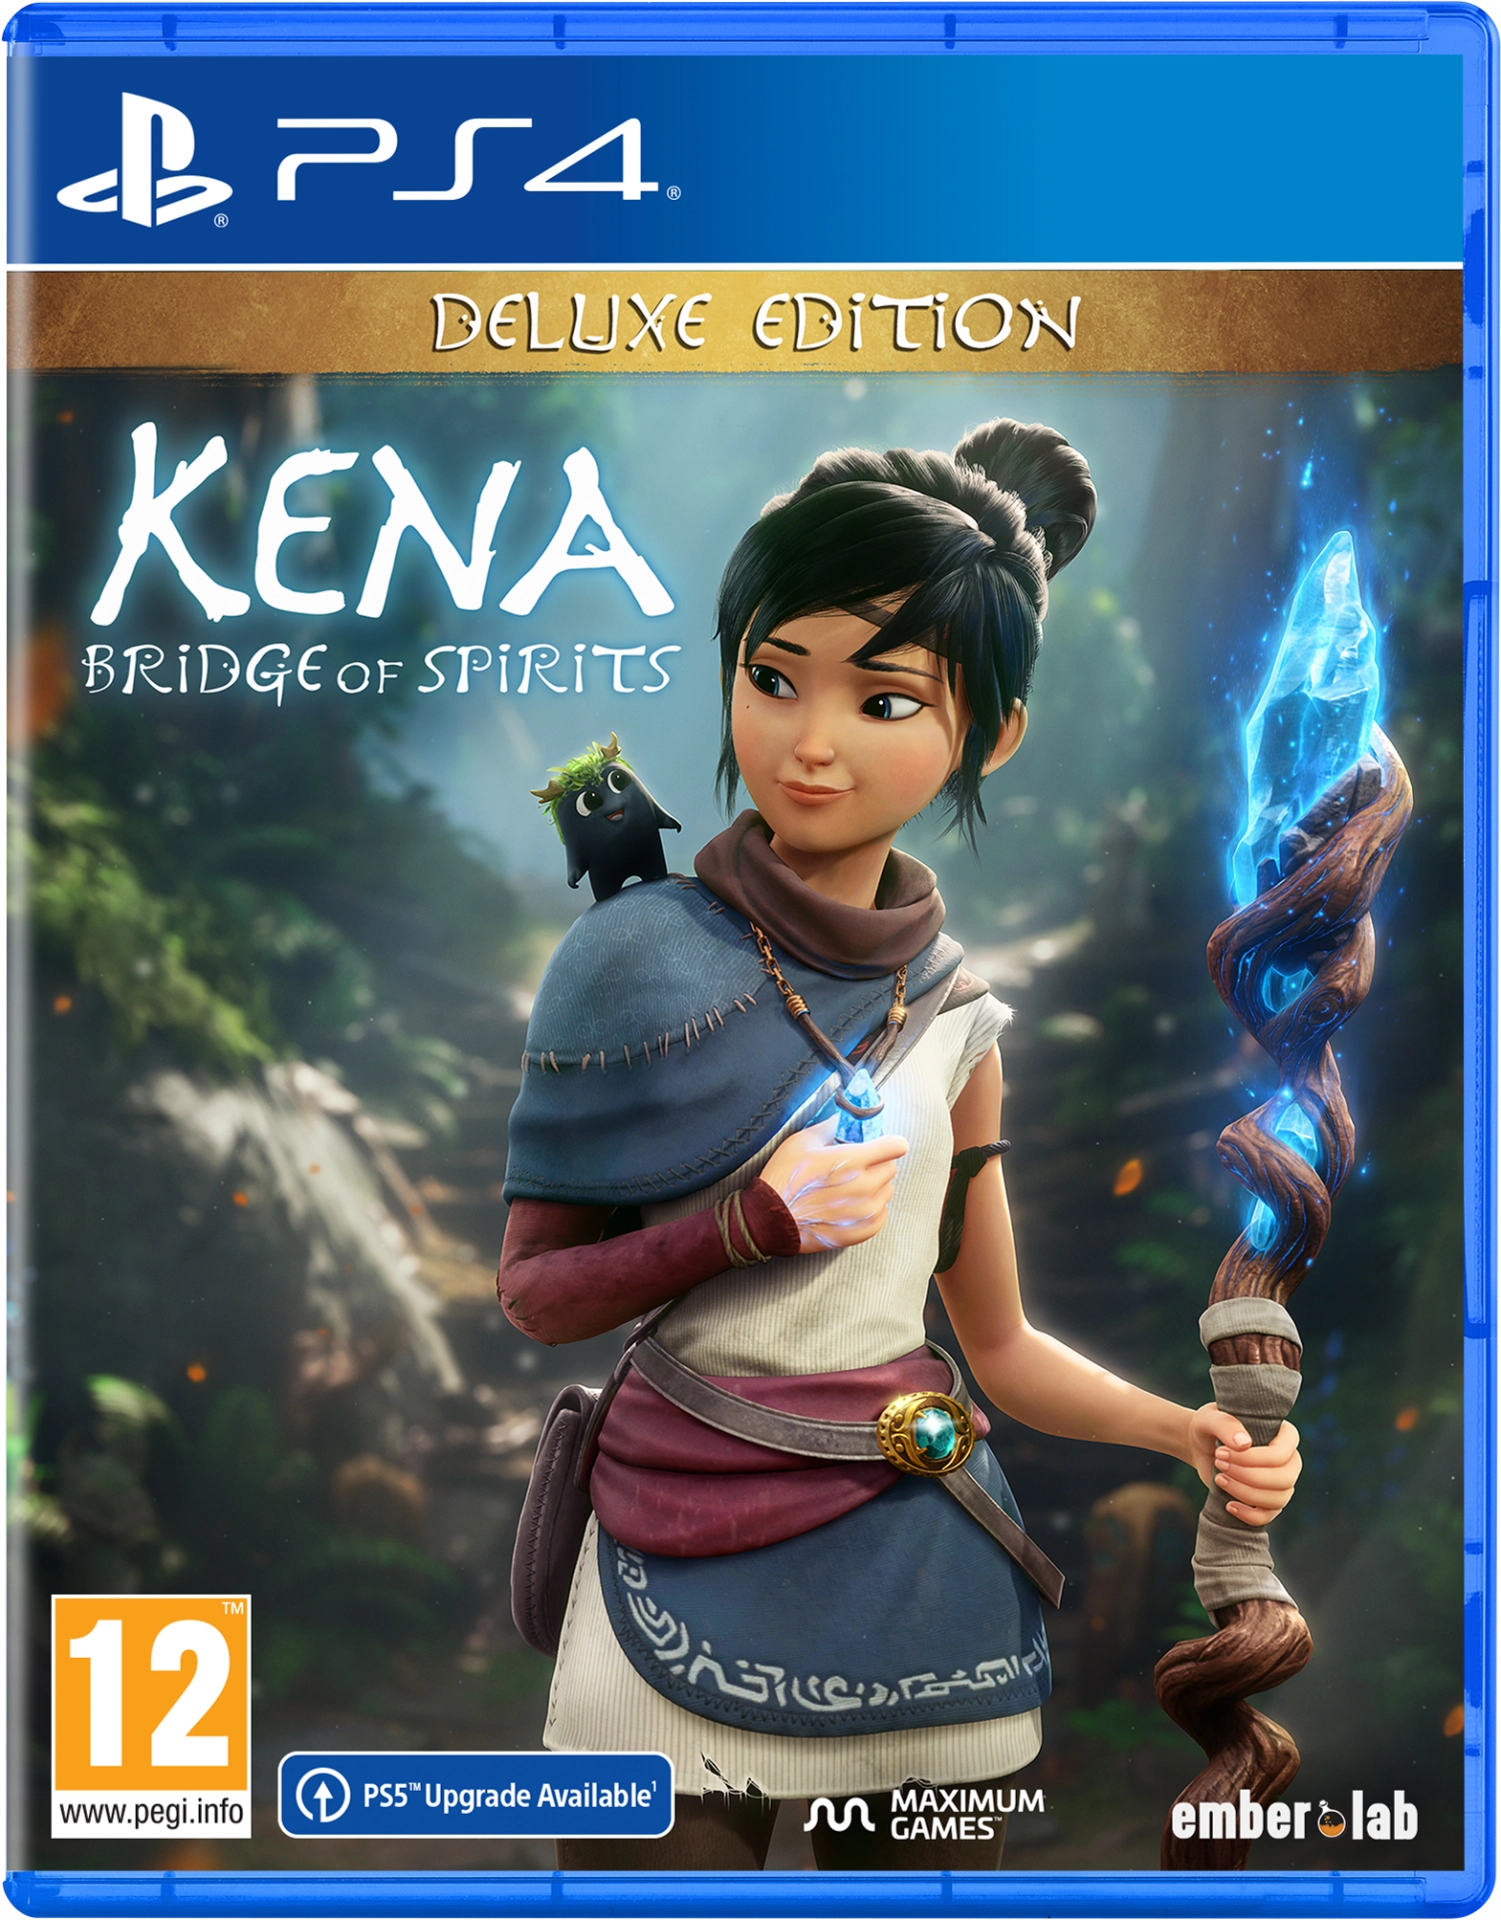 Kena: Bridge of Spirits - Deluxe Edition (PS4), Maximum Games